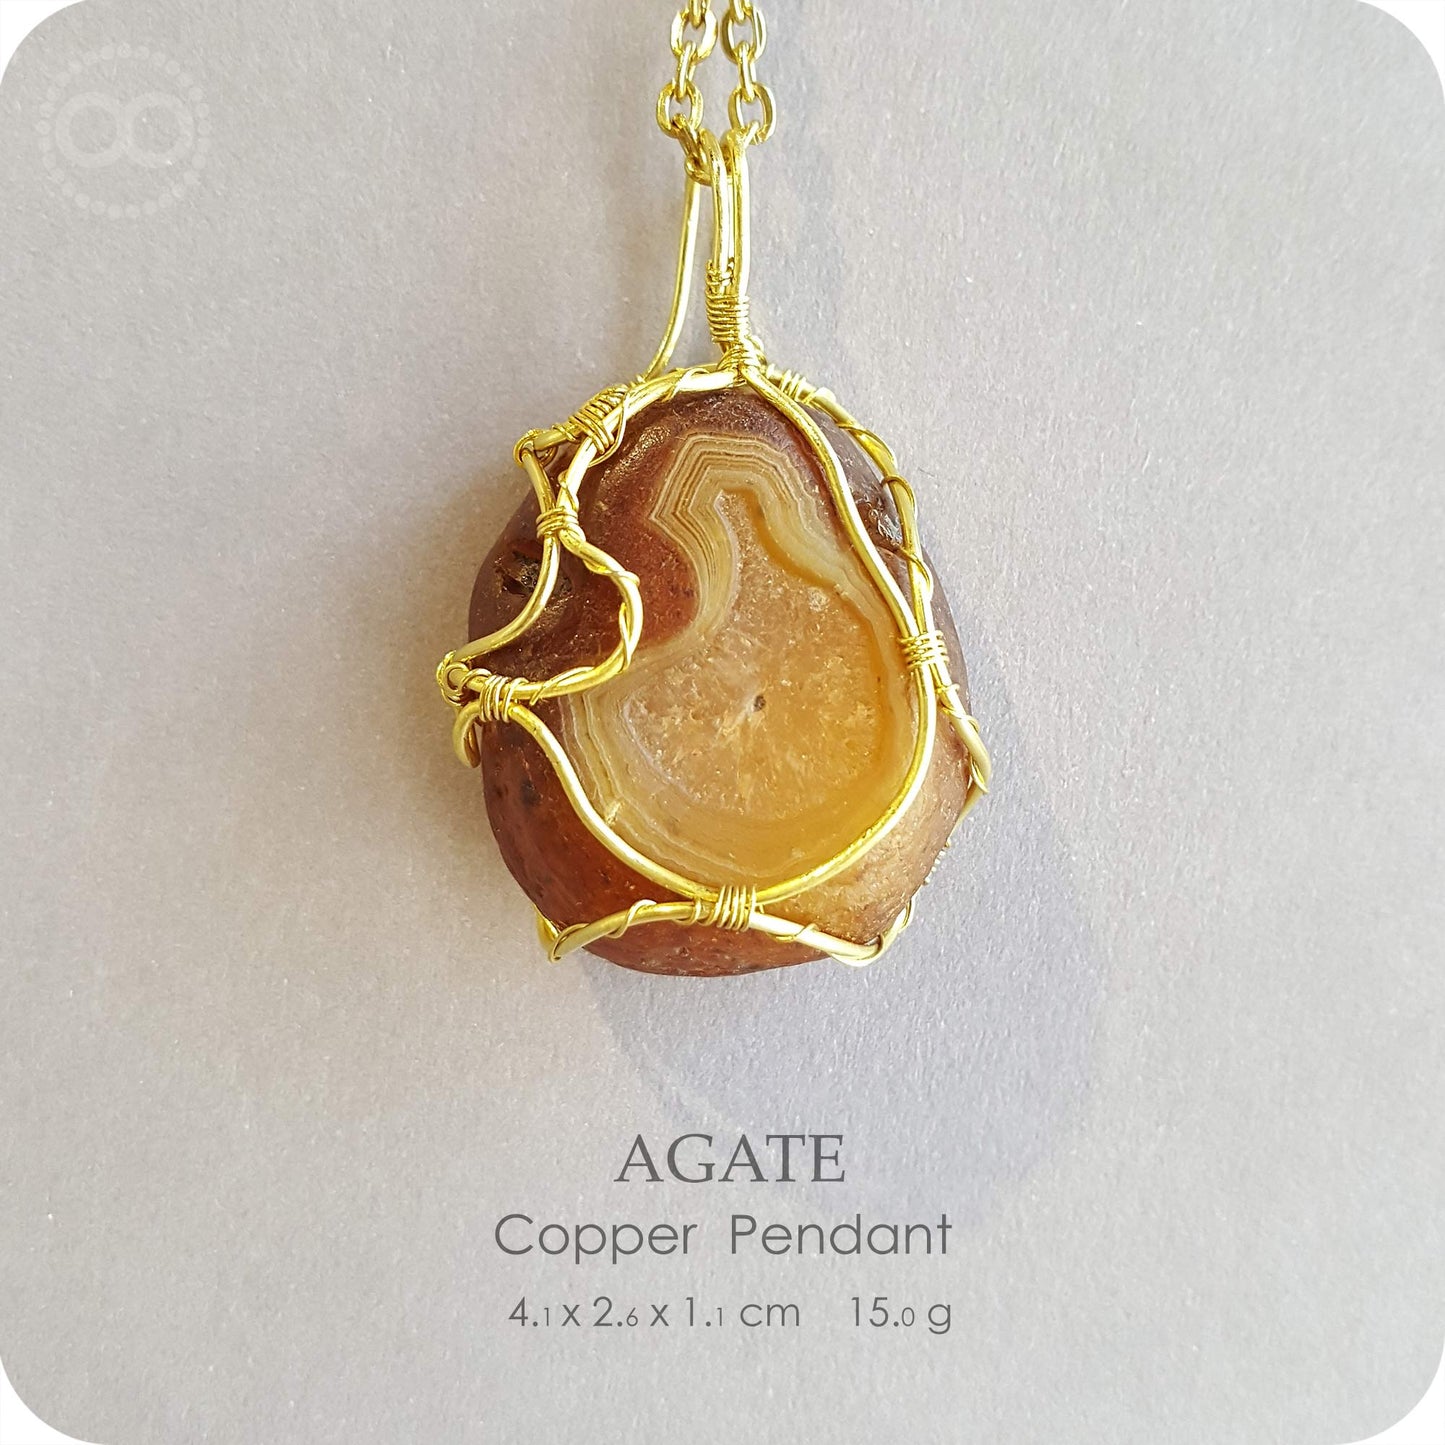 【 For Xiǎo zhēn 】Agate 原皮風化瑪瑙 Copper Pendant - H207